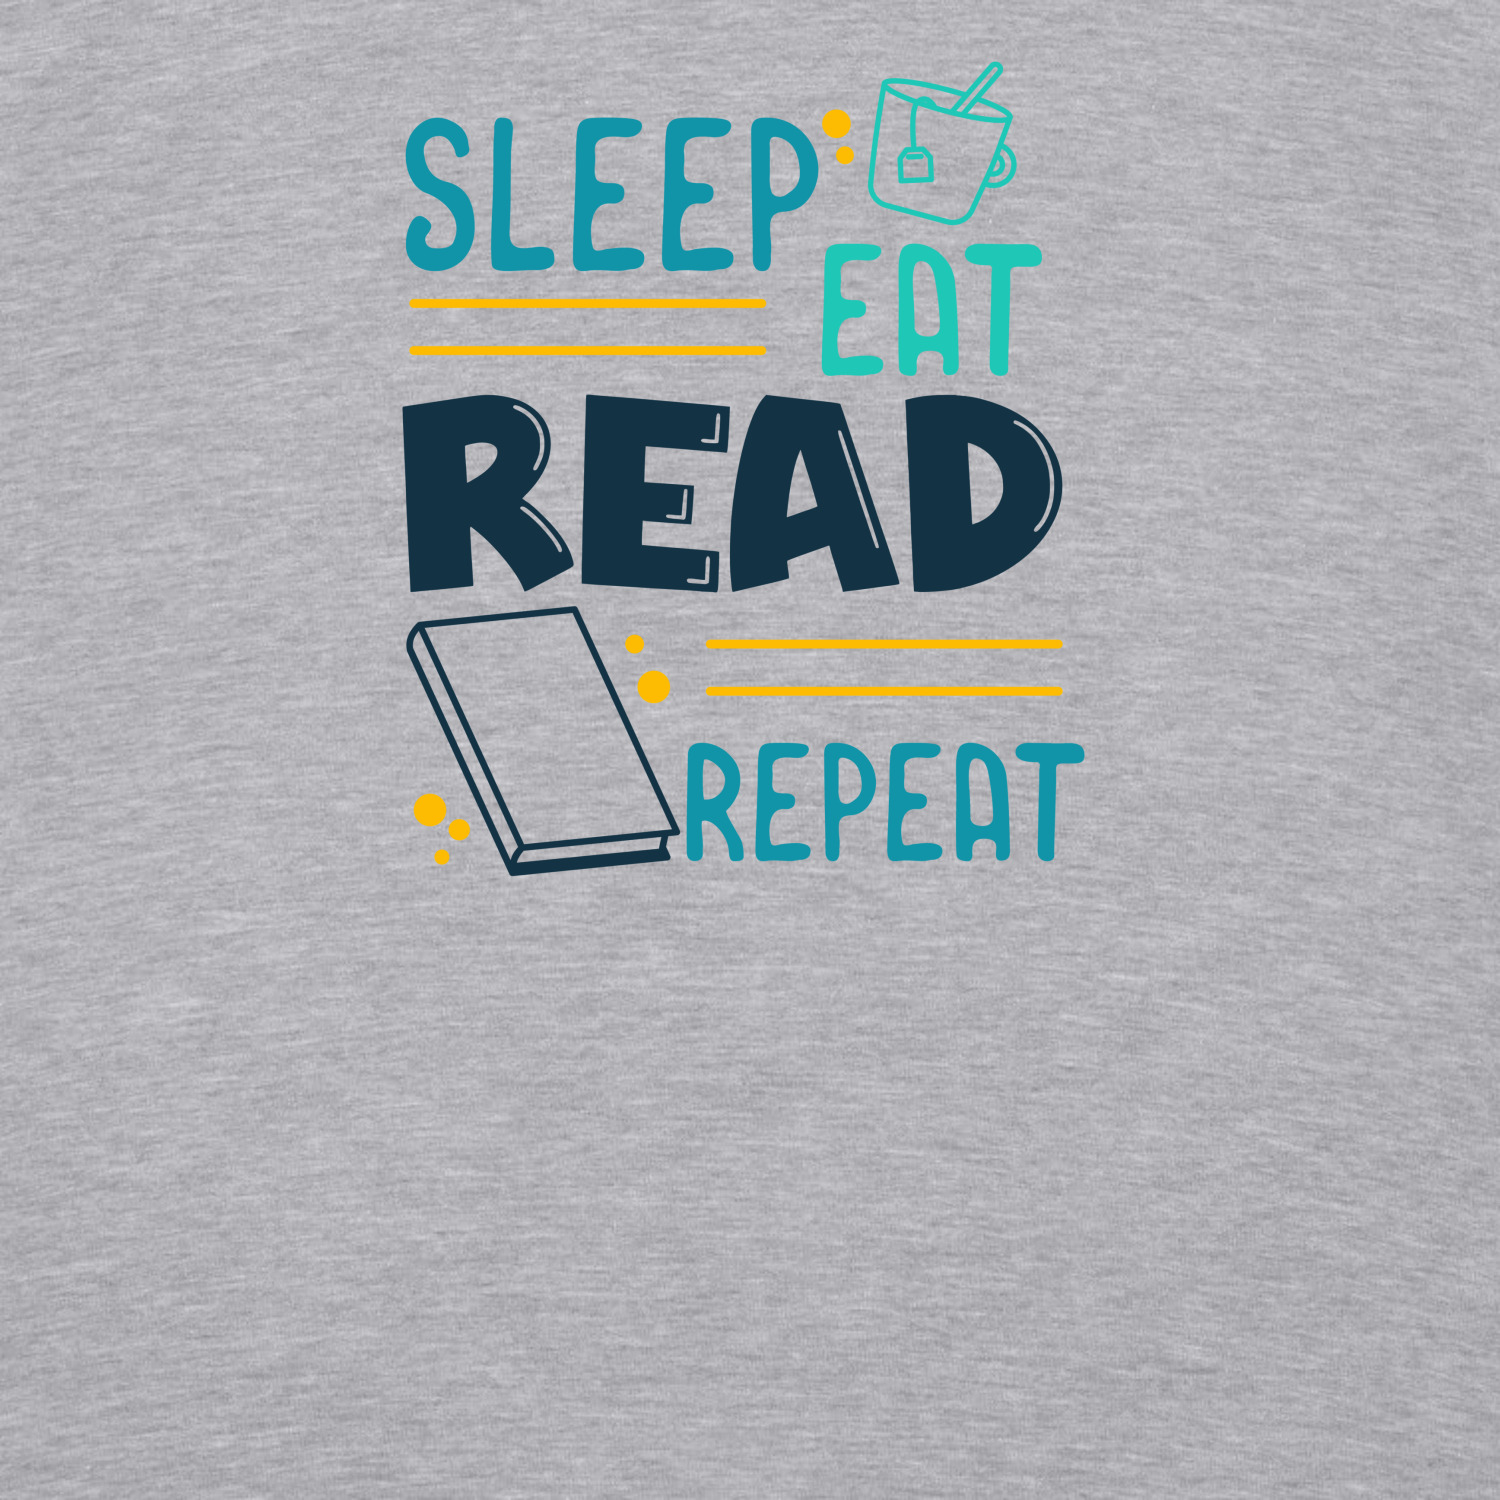 Футболка eat Sleep marketing repeat. Картинка eat Sleep code repeat. Listen read repeat